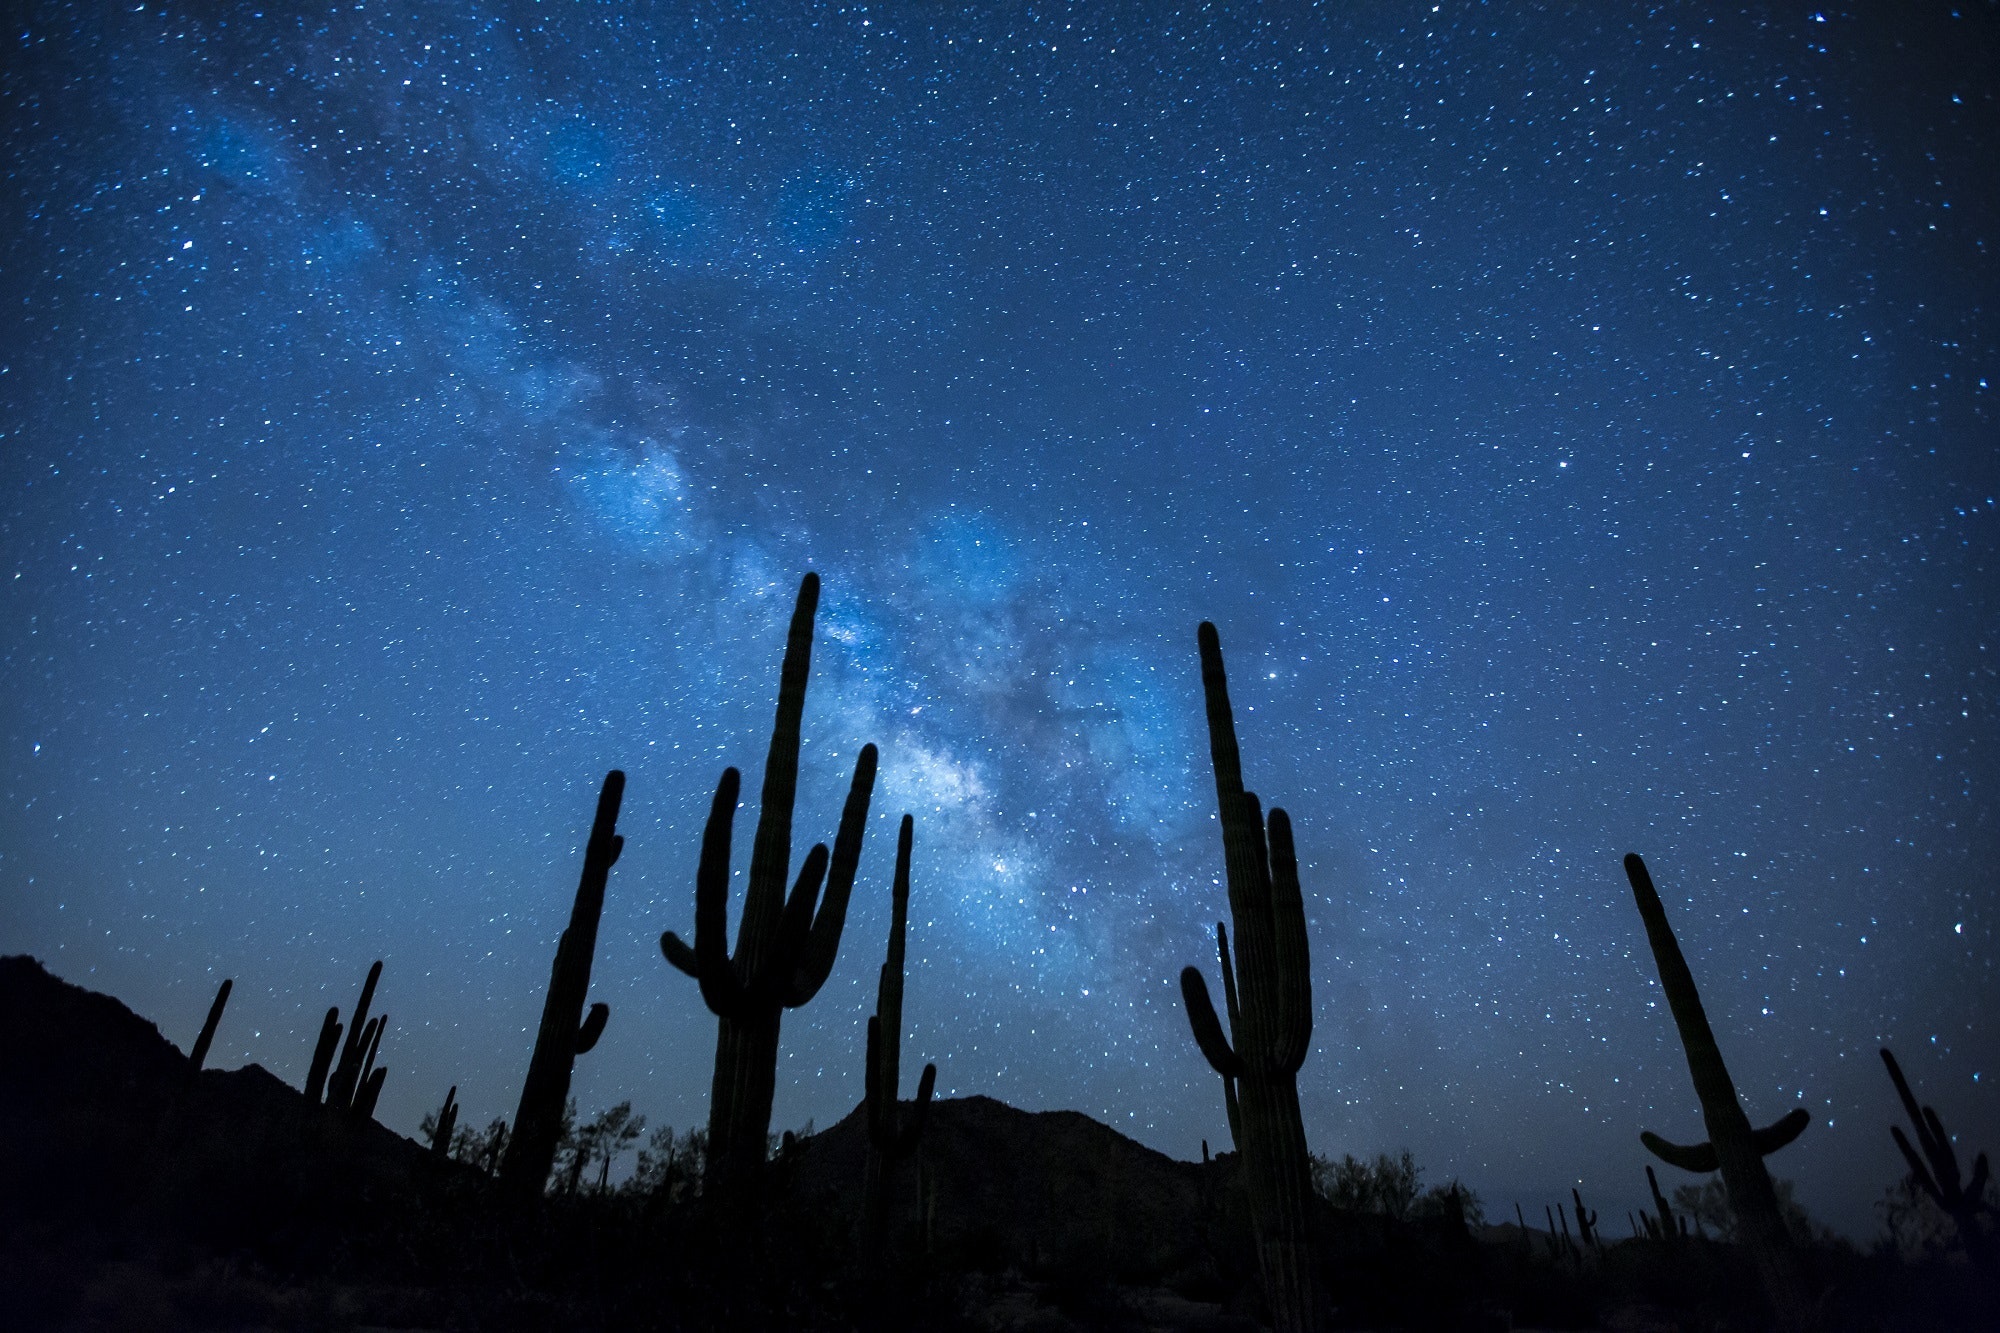 Desert Night Sky Wallpapers